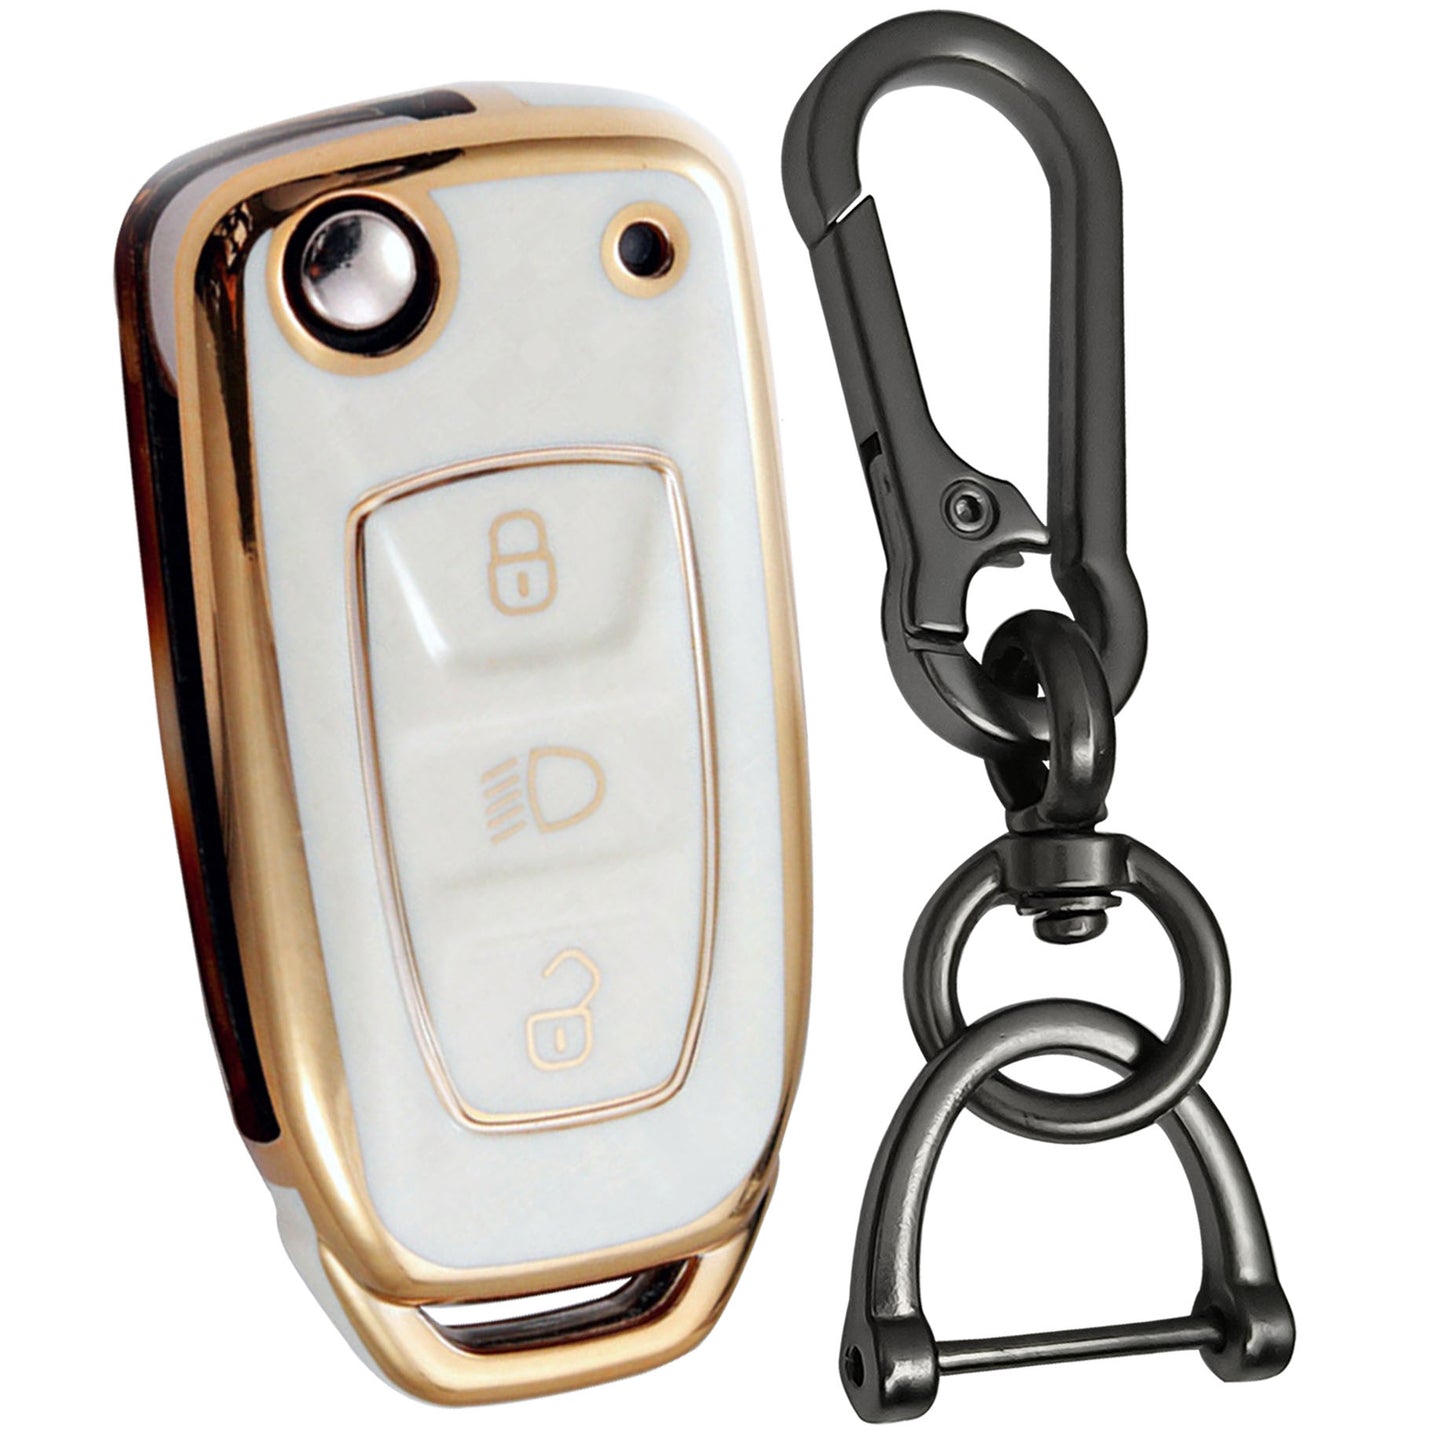 tata zest nexon hexa tiago 3b flip tpu white gold key cover keychain